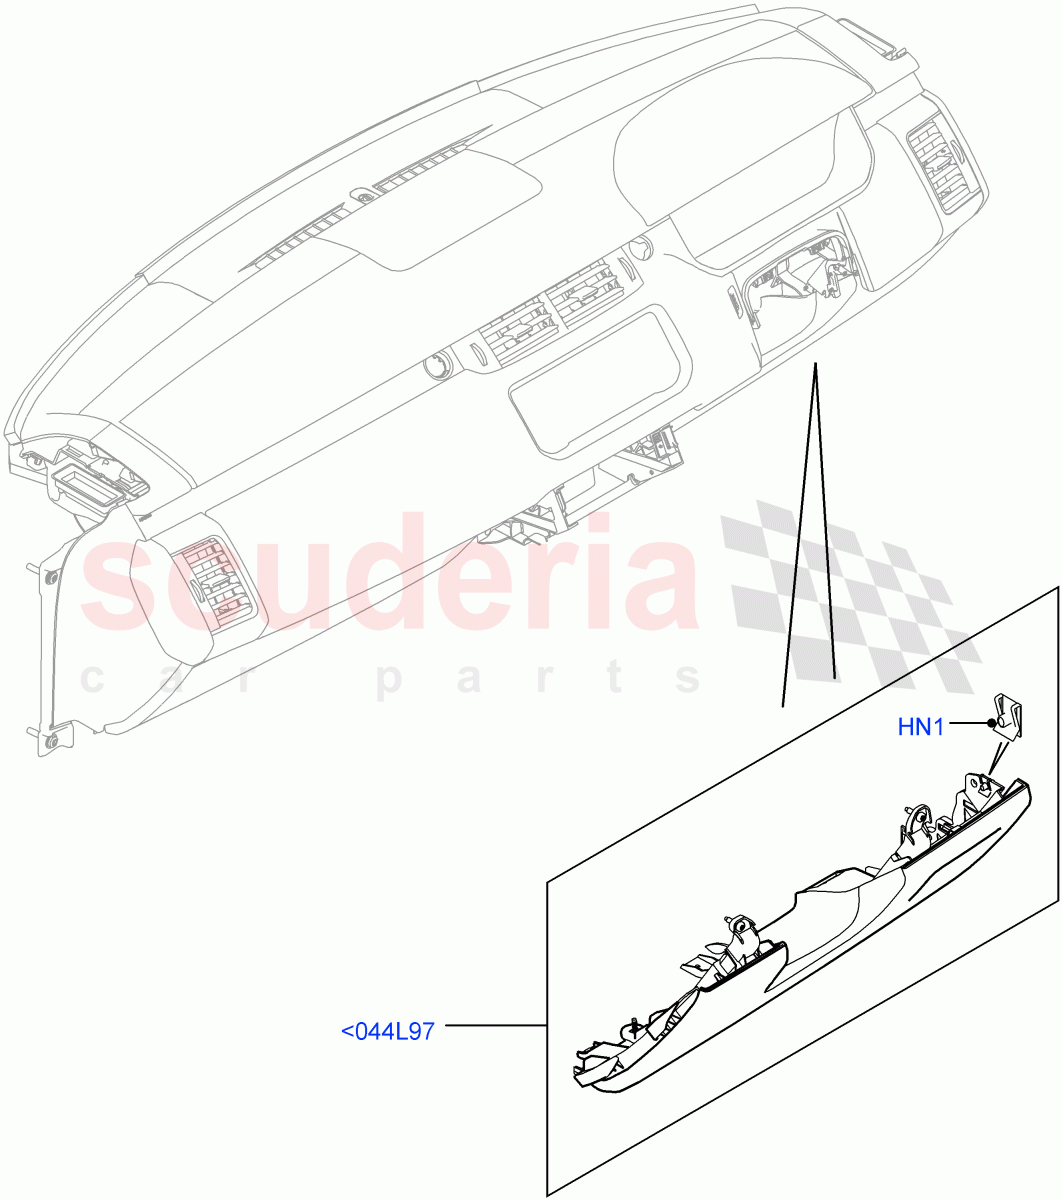 Instrument Panel(External, Lower) of Land Rover Land Rover Range Rover Sport (2014+) [2.0 Turbo Diesel]